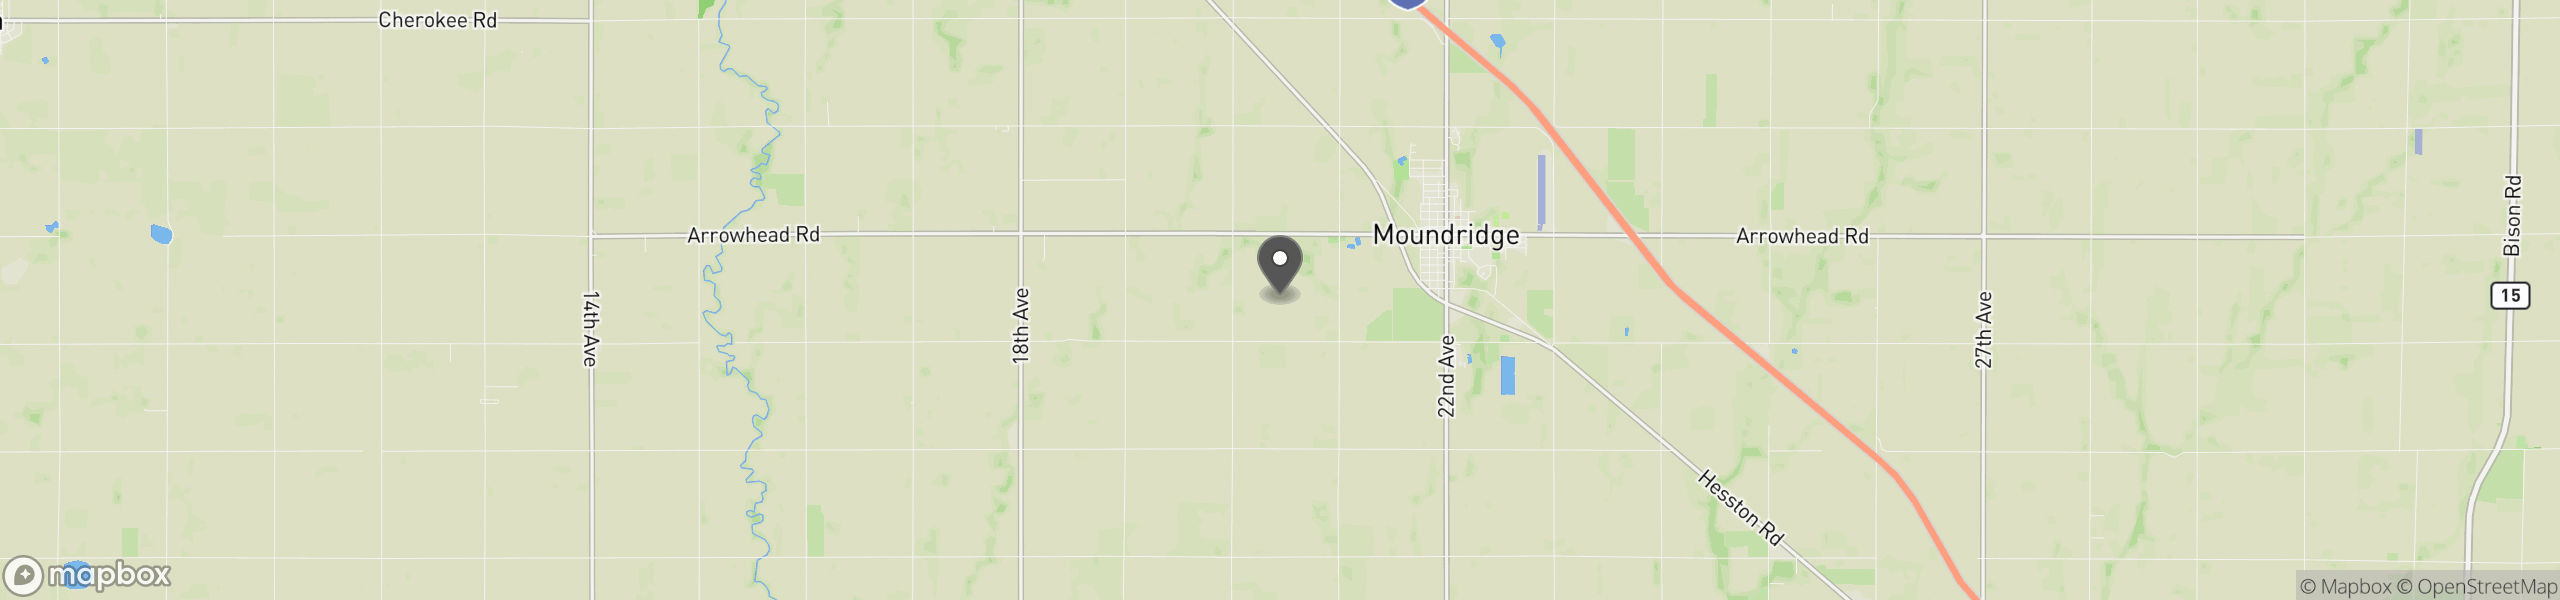 Moundridge, KS